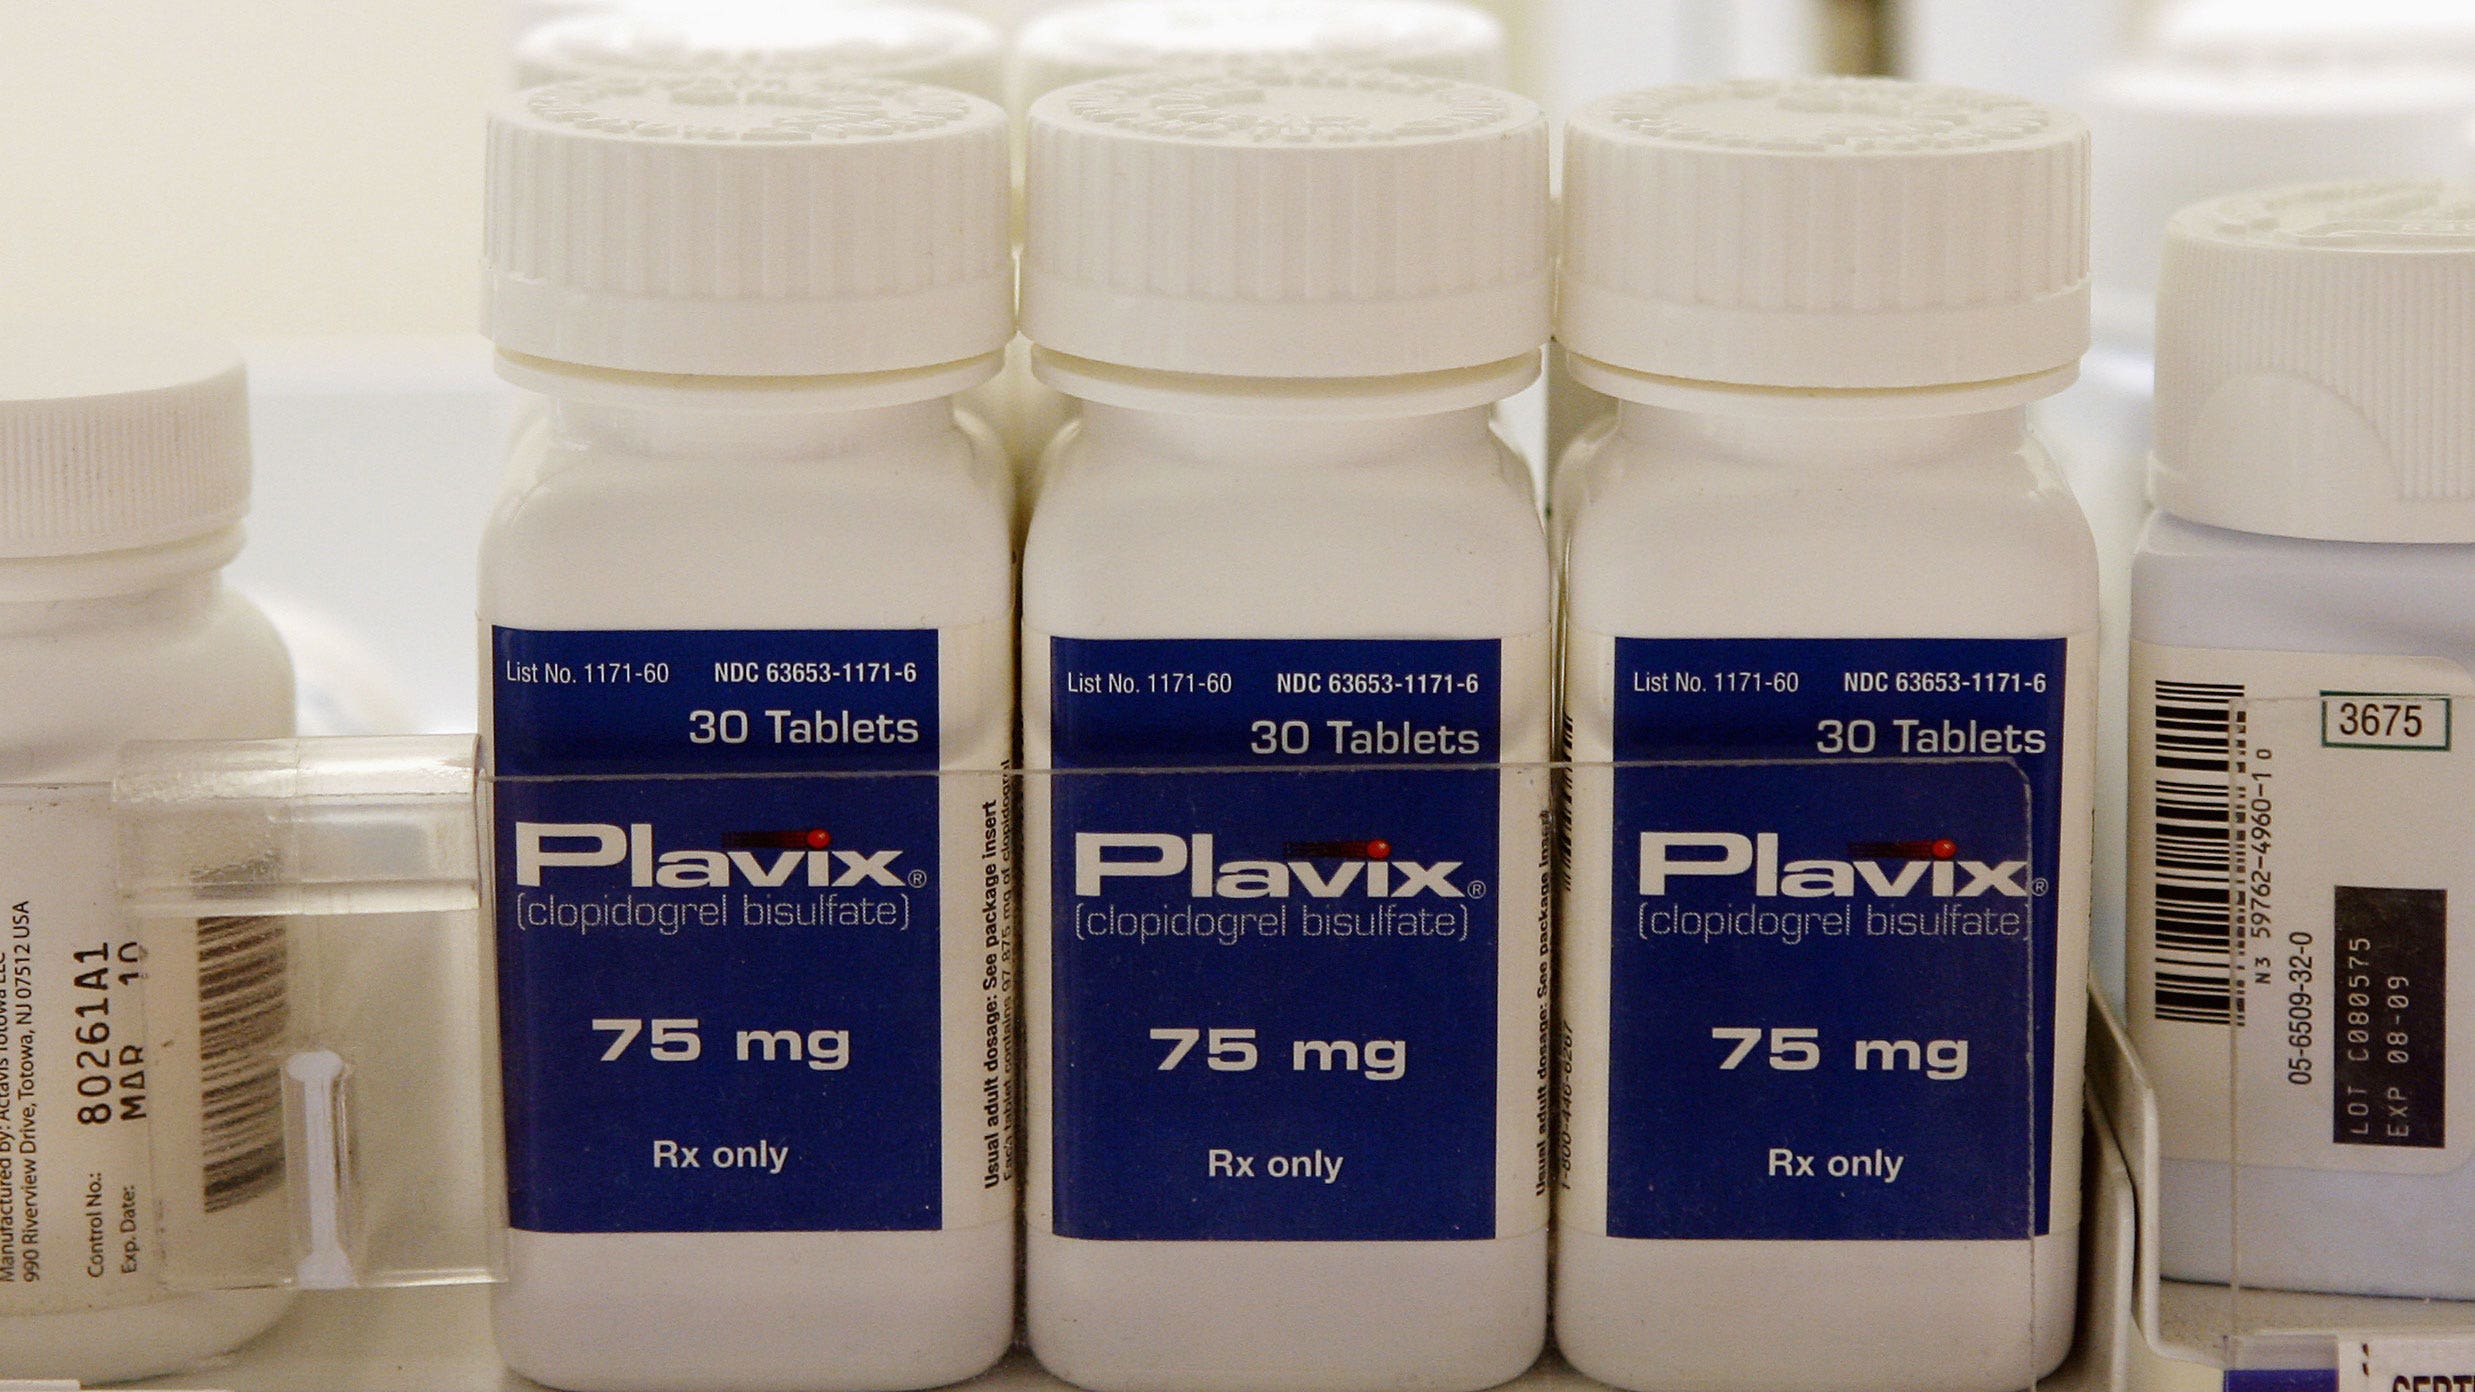 Bristol-Myers, Sanofi ordered to pay Hawaii $ 834 million over Plavix warning label